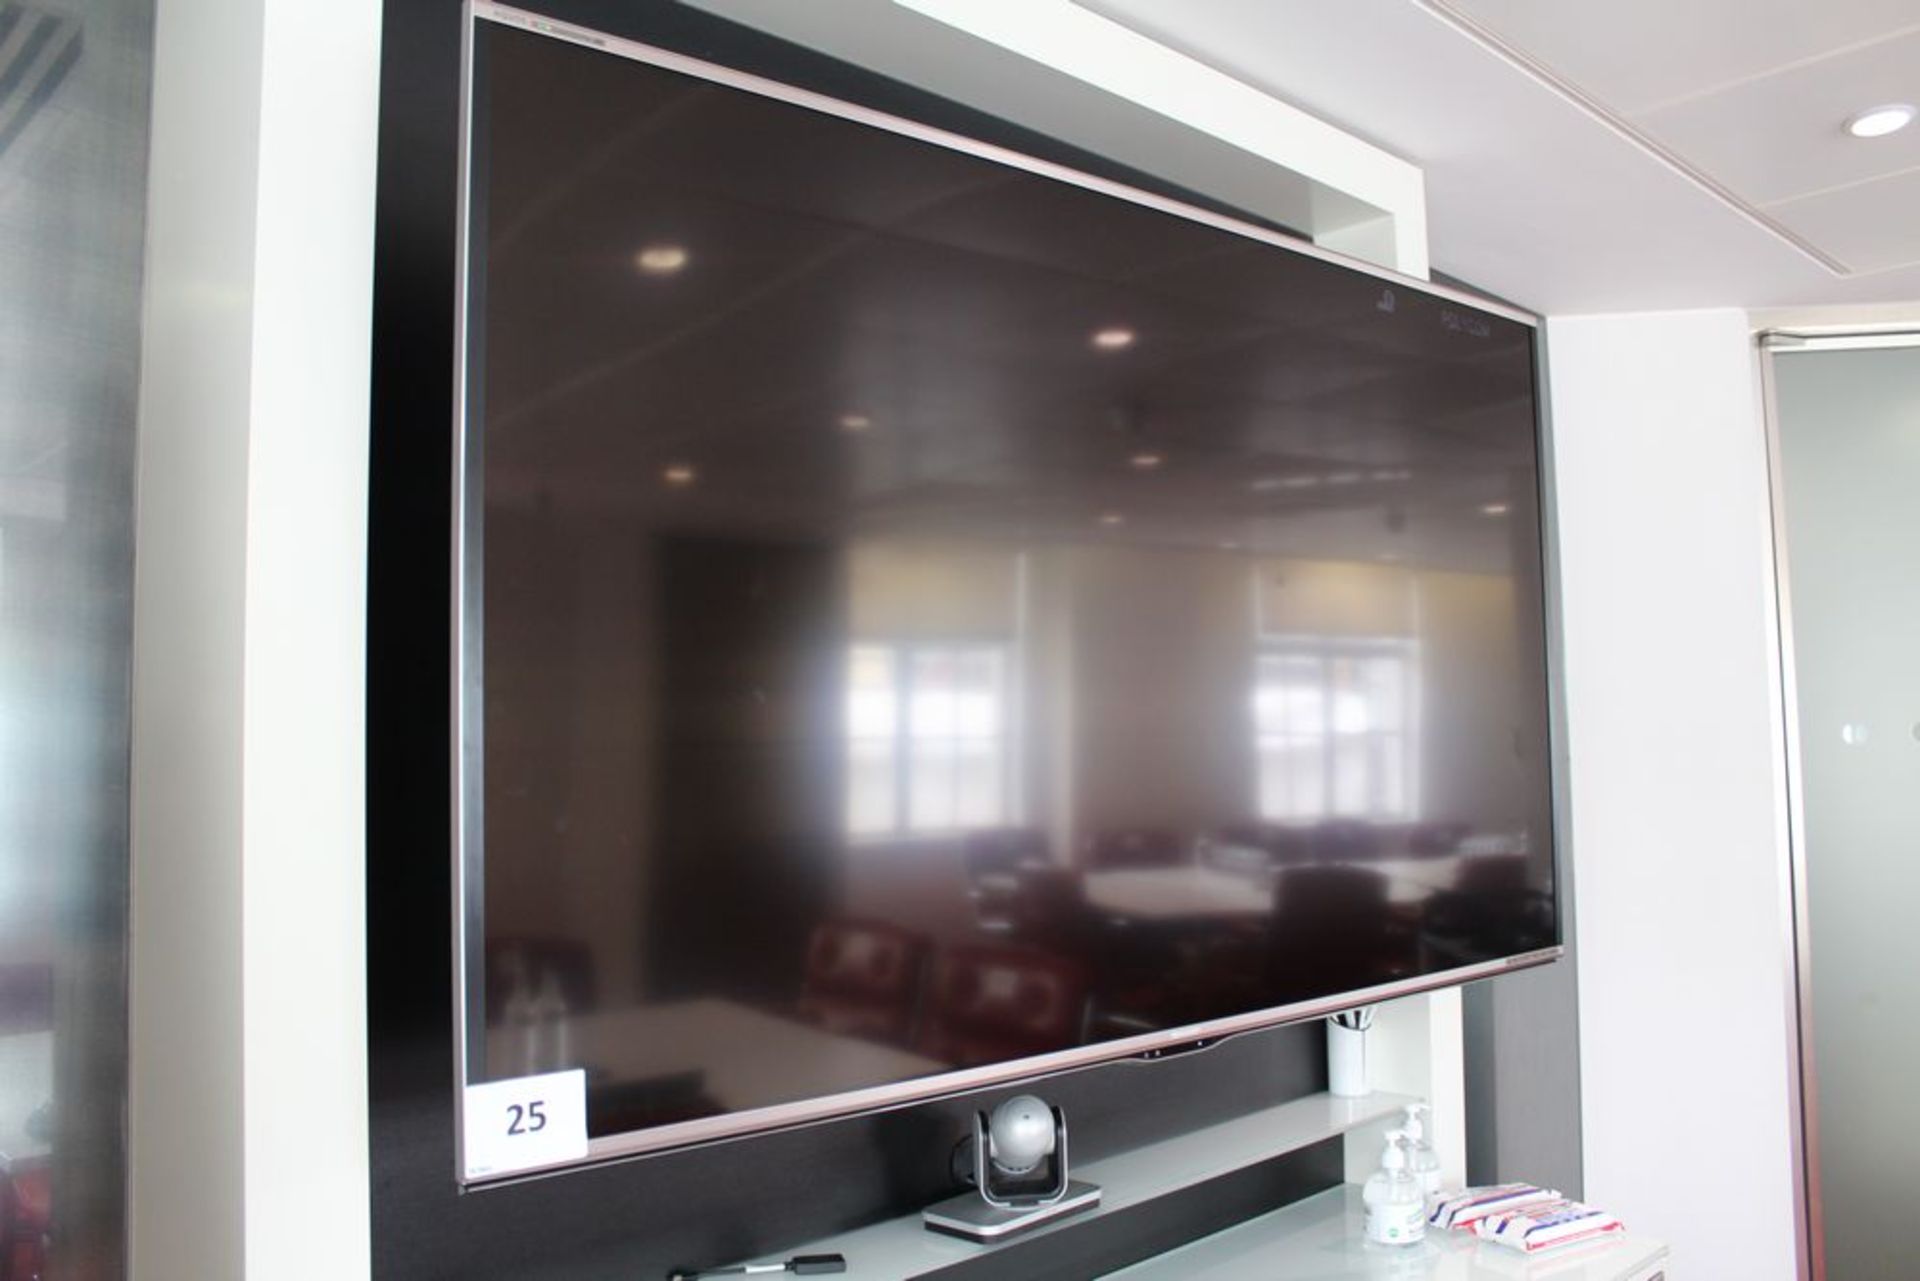 Sharp LC-70UQ10KN, 70 Inch Flat Screen TV S/N 502011328